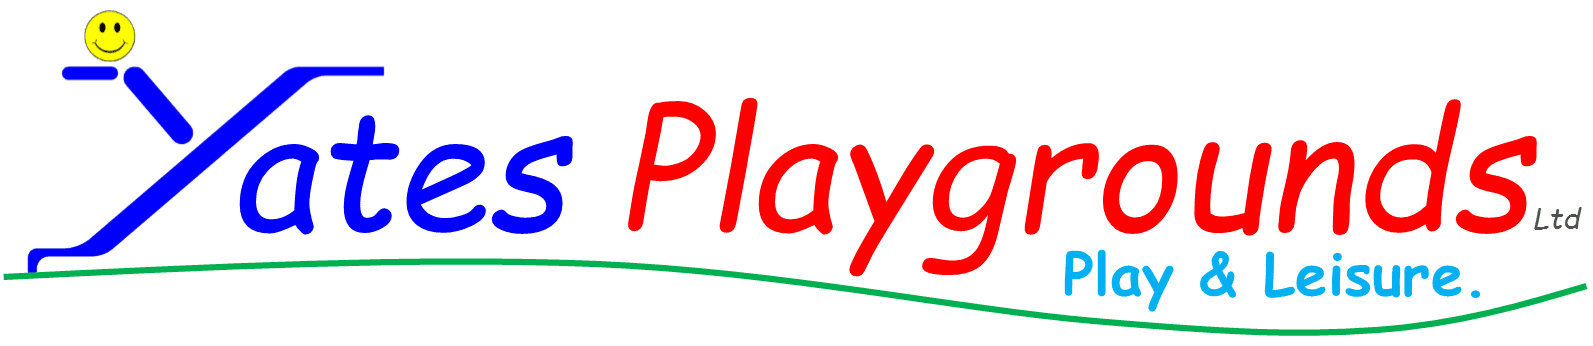 Yates Playgrounds - Play & Leisure